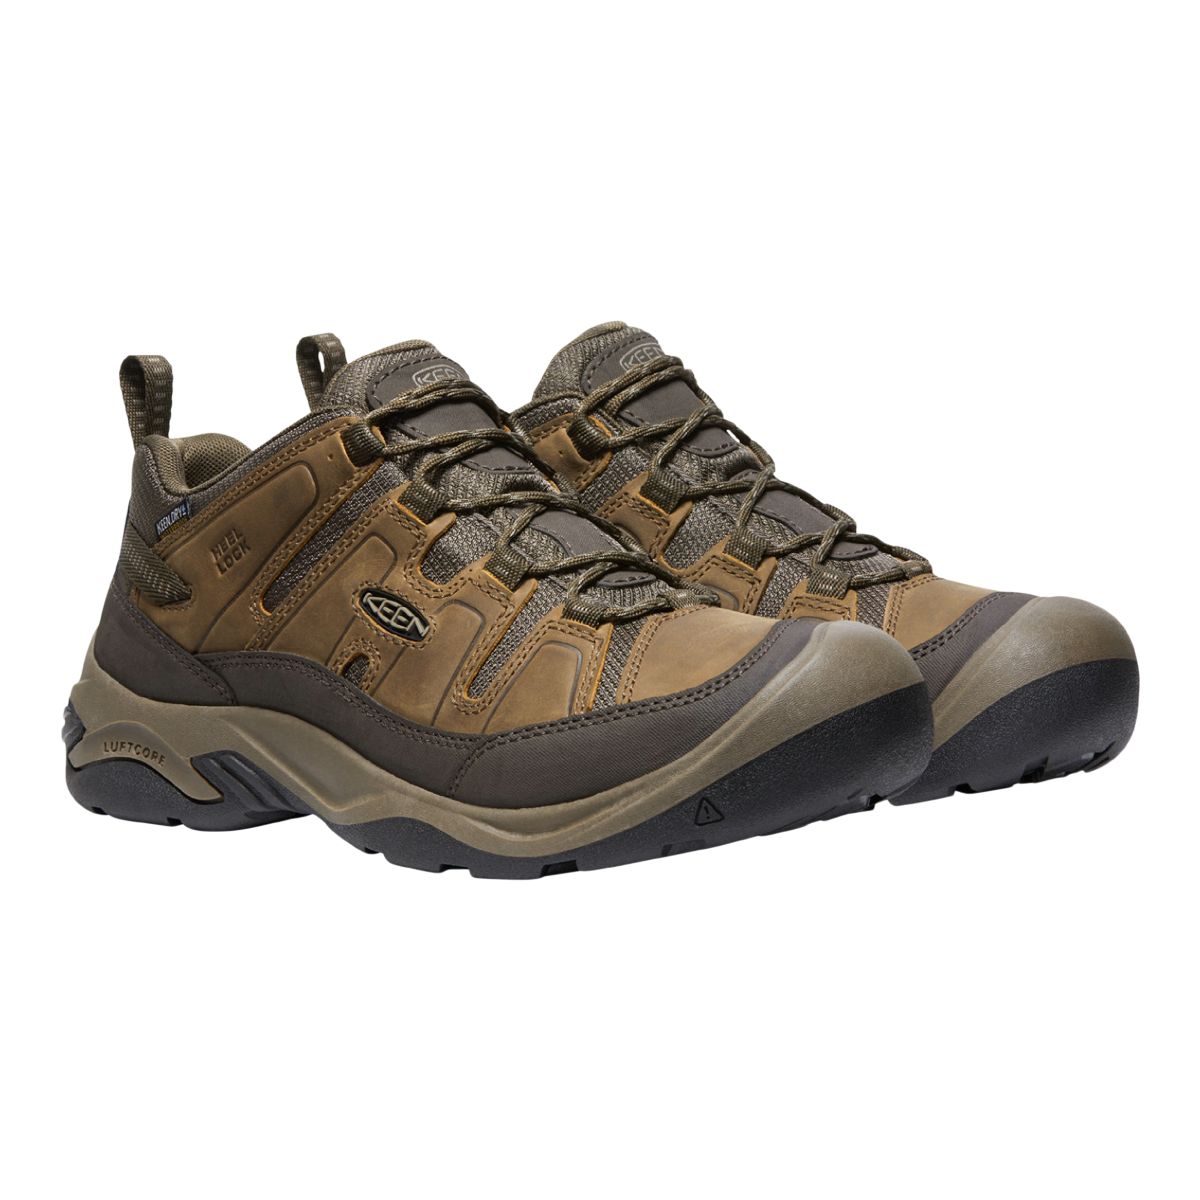 Keen Ridge Flex Mid Hiking Boots (For Men) - Save 40%